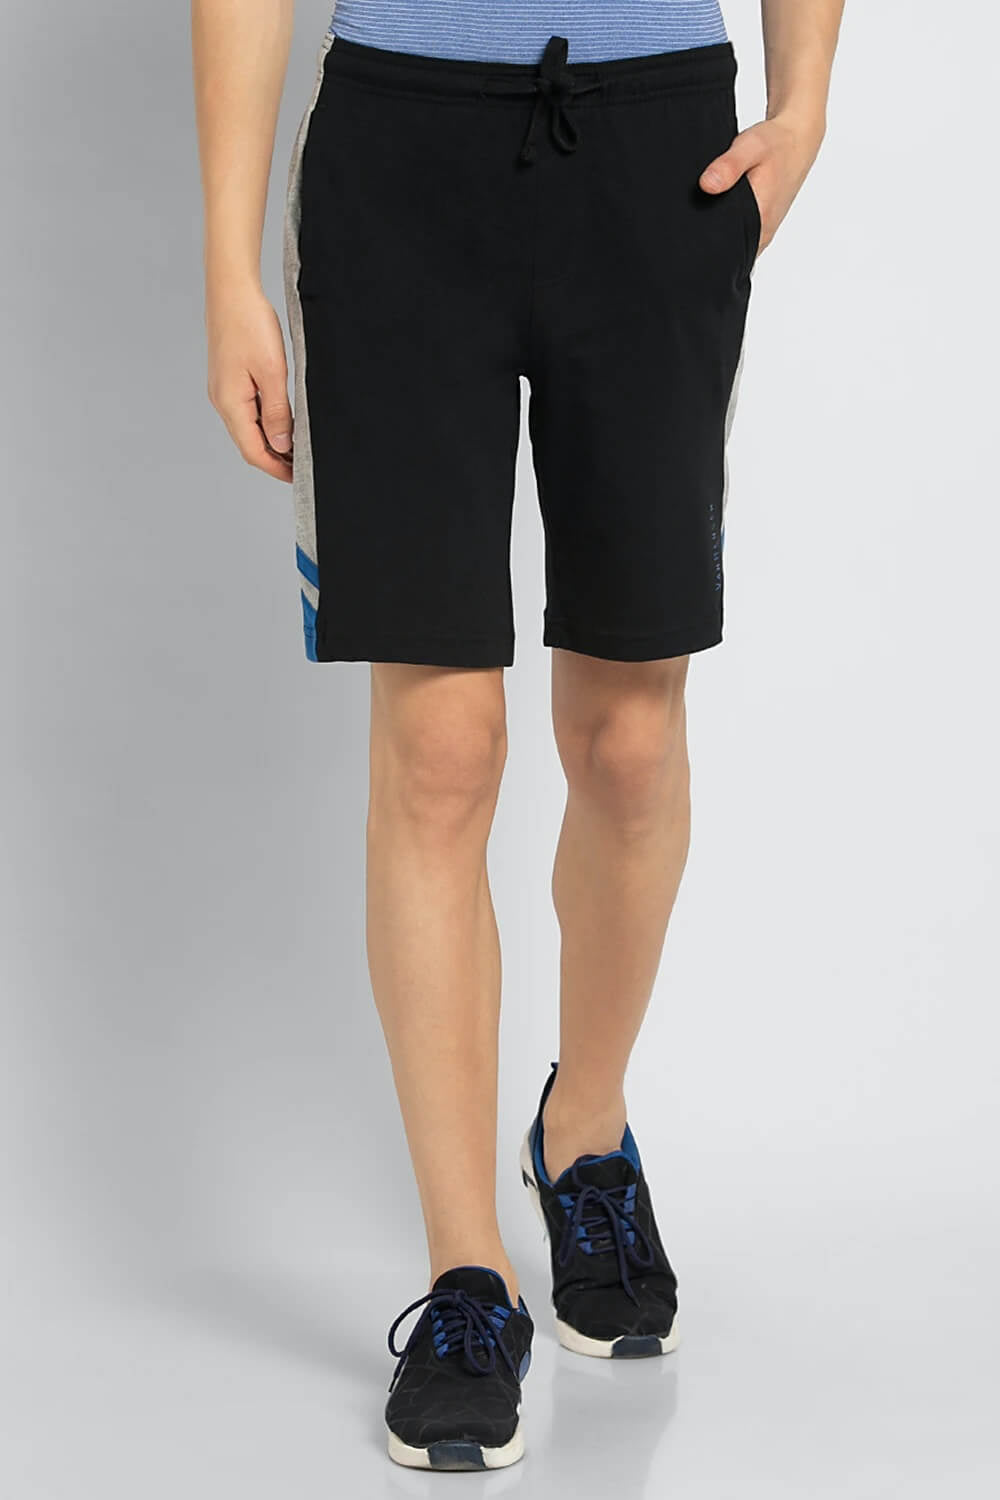 Van Heusen Black Knit Shorts for Men #50006